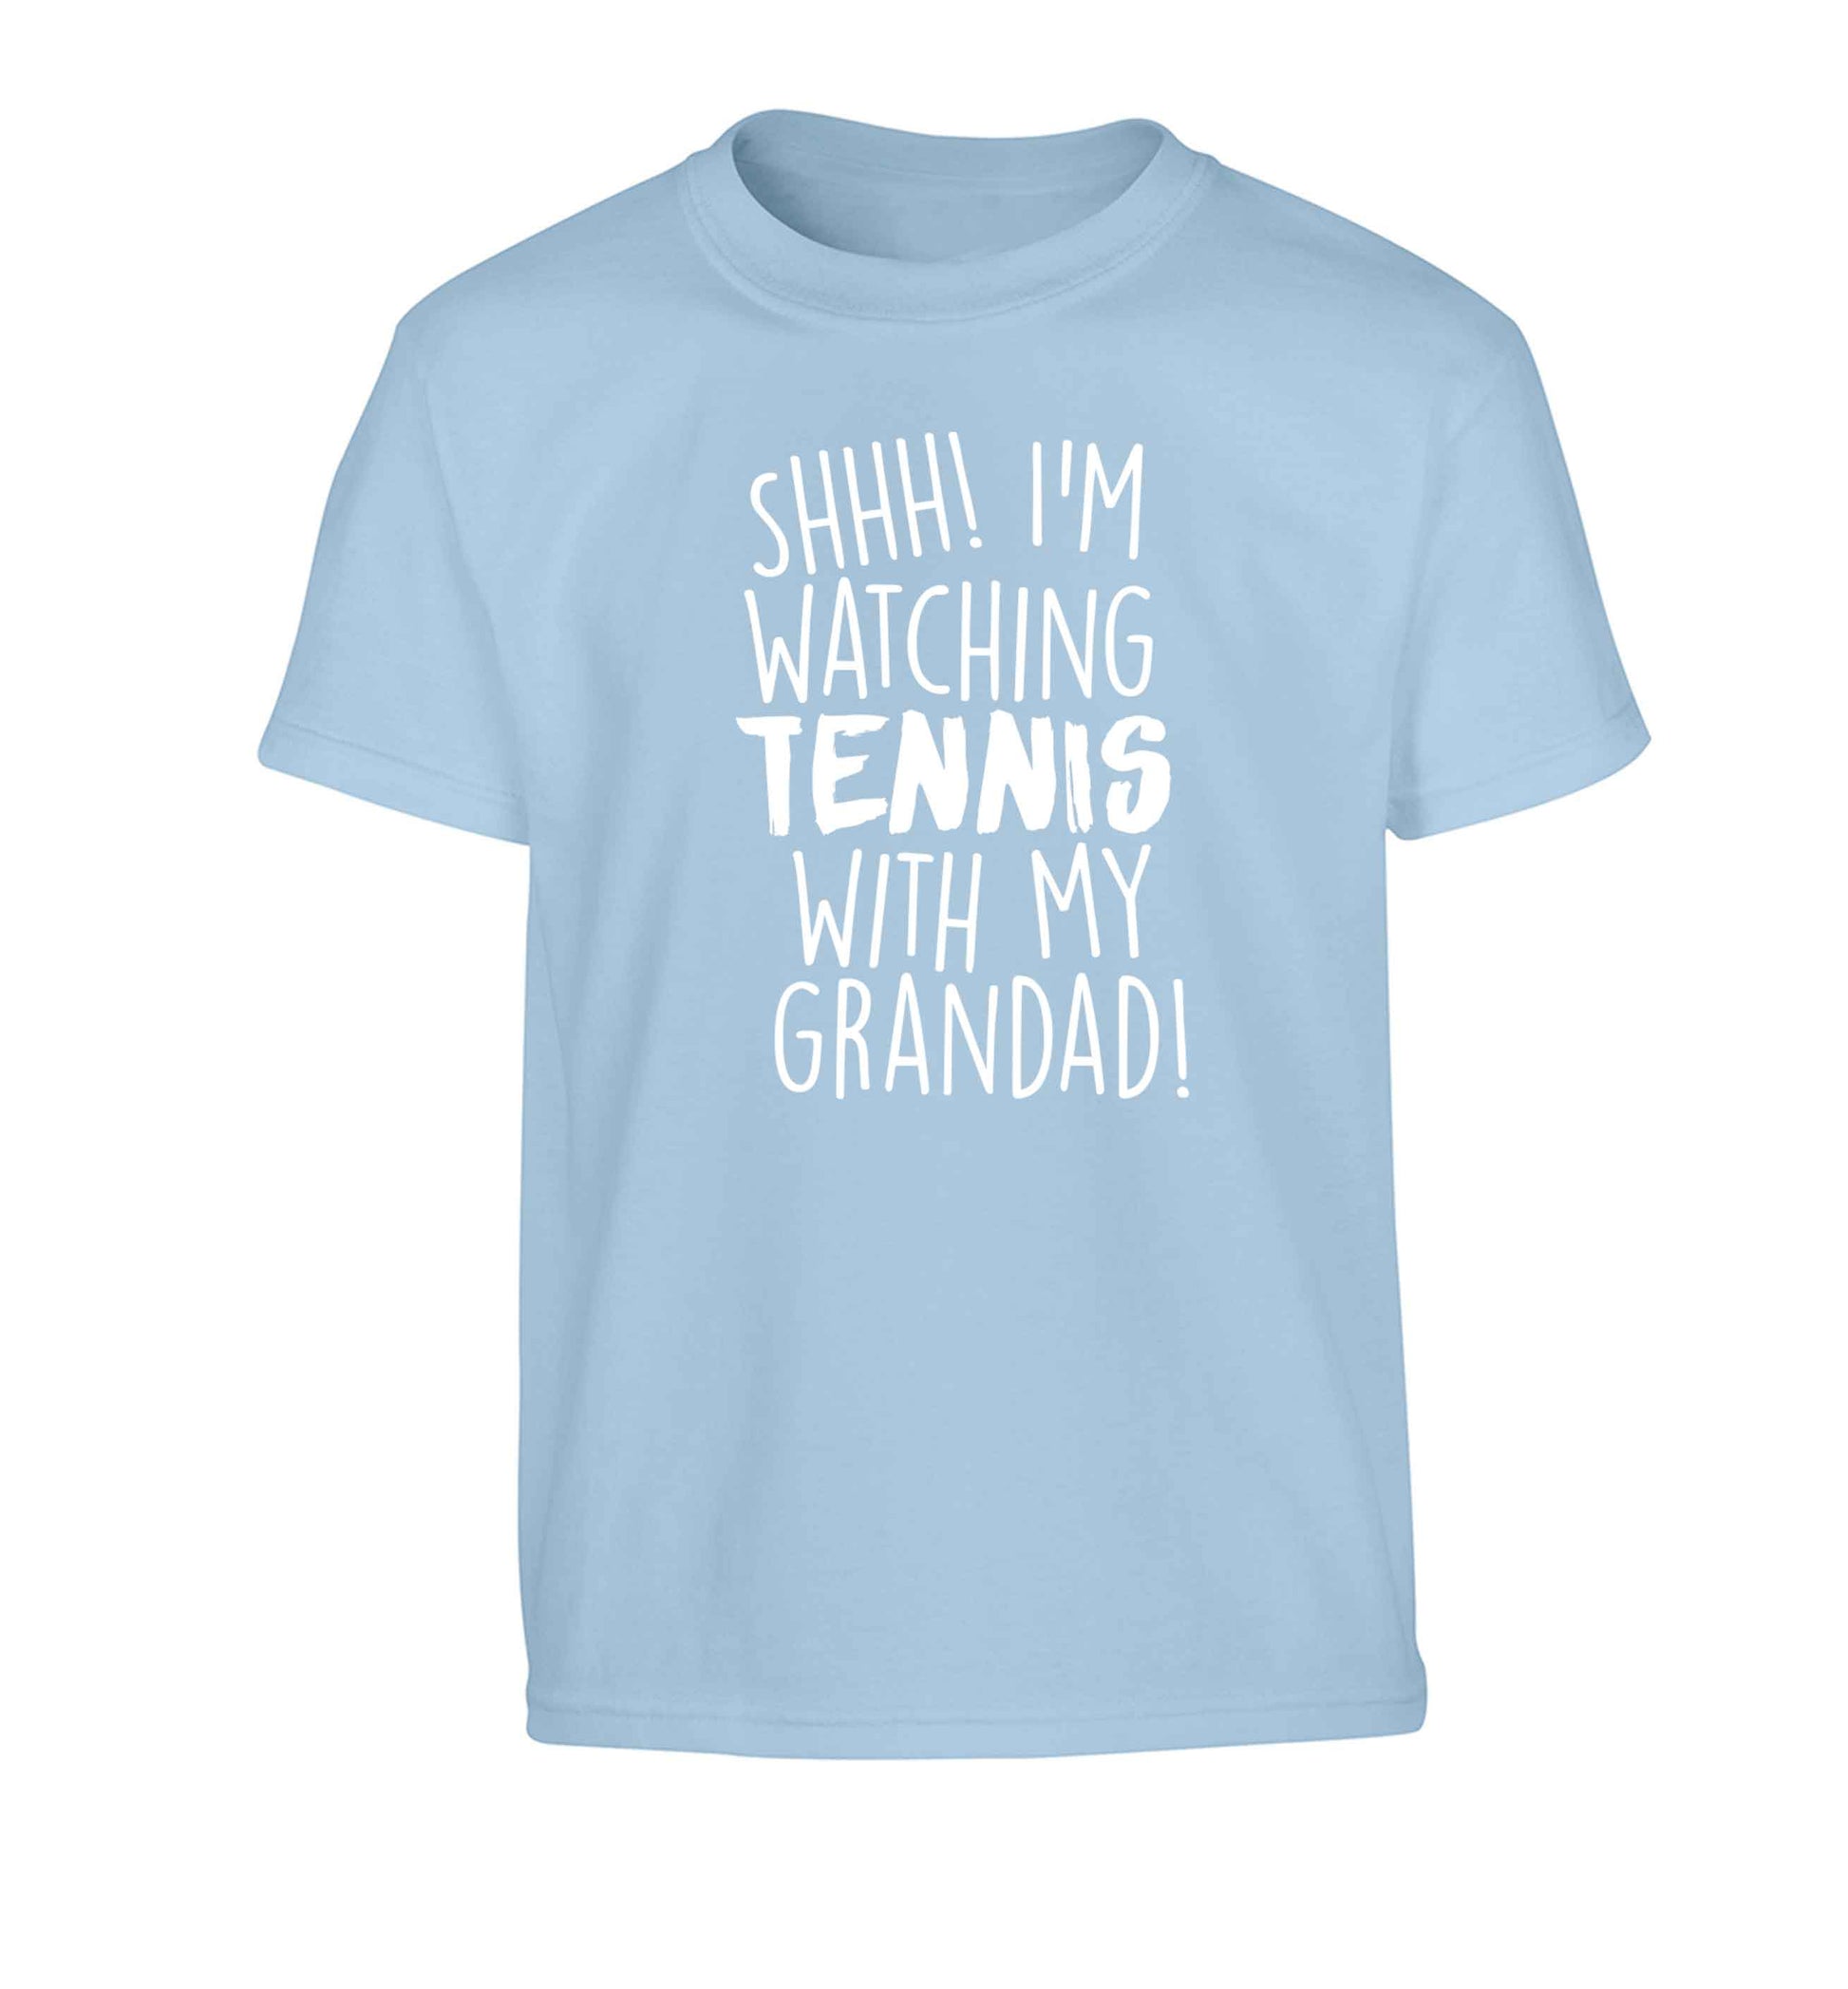 Shh! I'm watching tennis with my grandad! Children's light blue Tshirt 12-13 Years